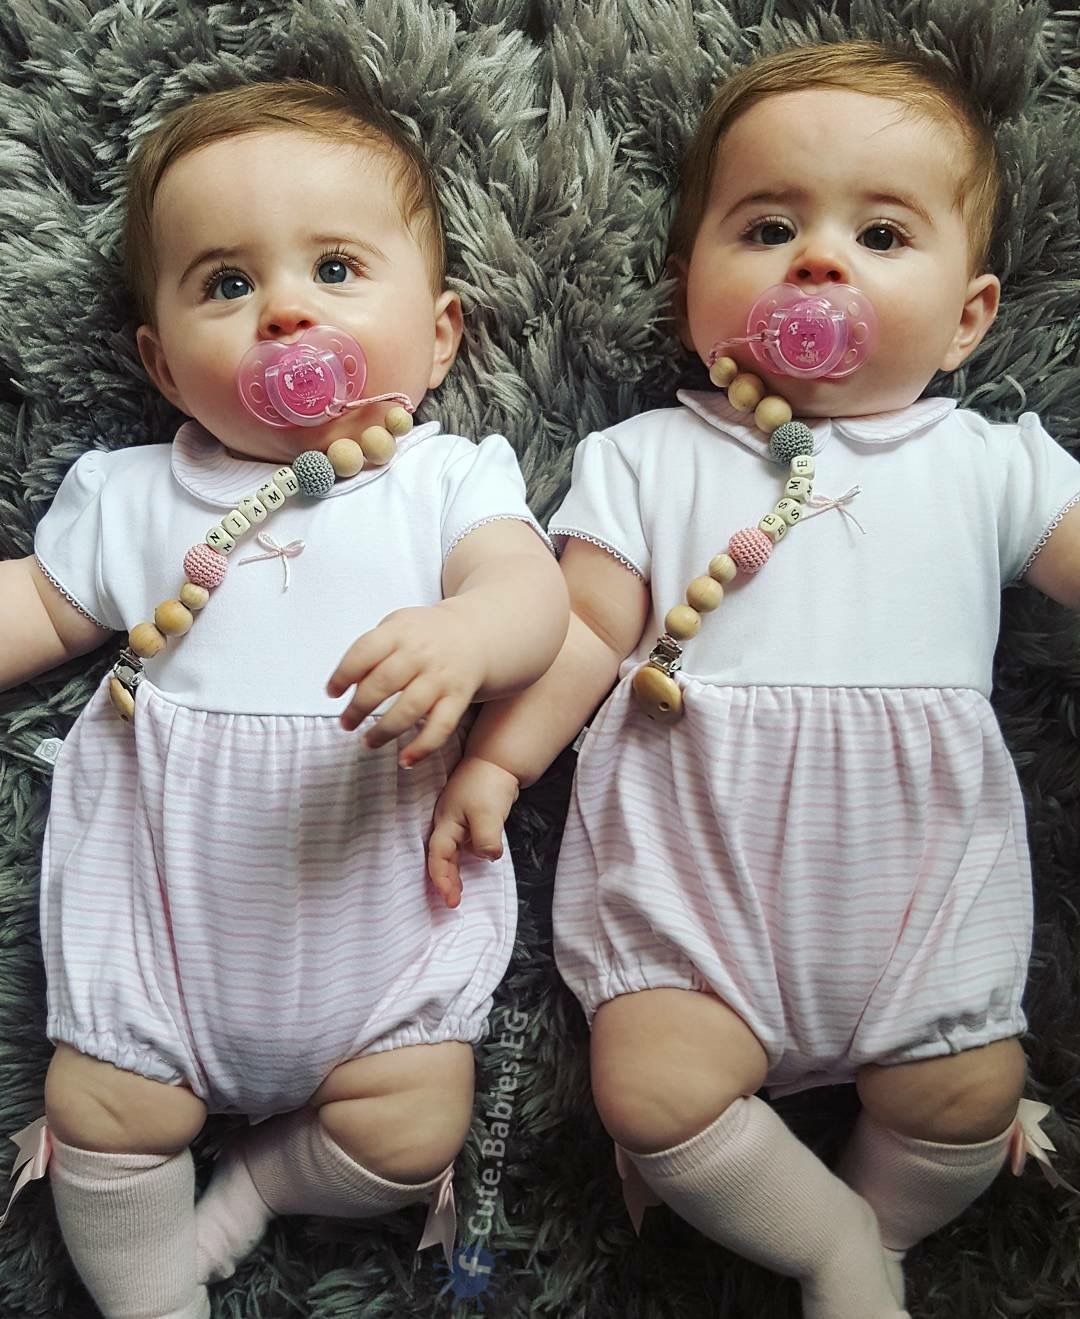 Wallpaper BMC. Twin baby photography, Cute babies, Cute kids